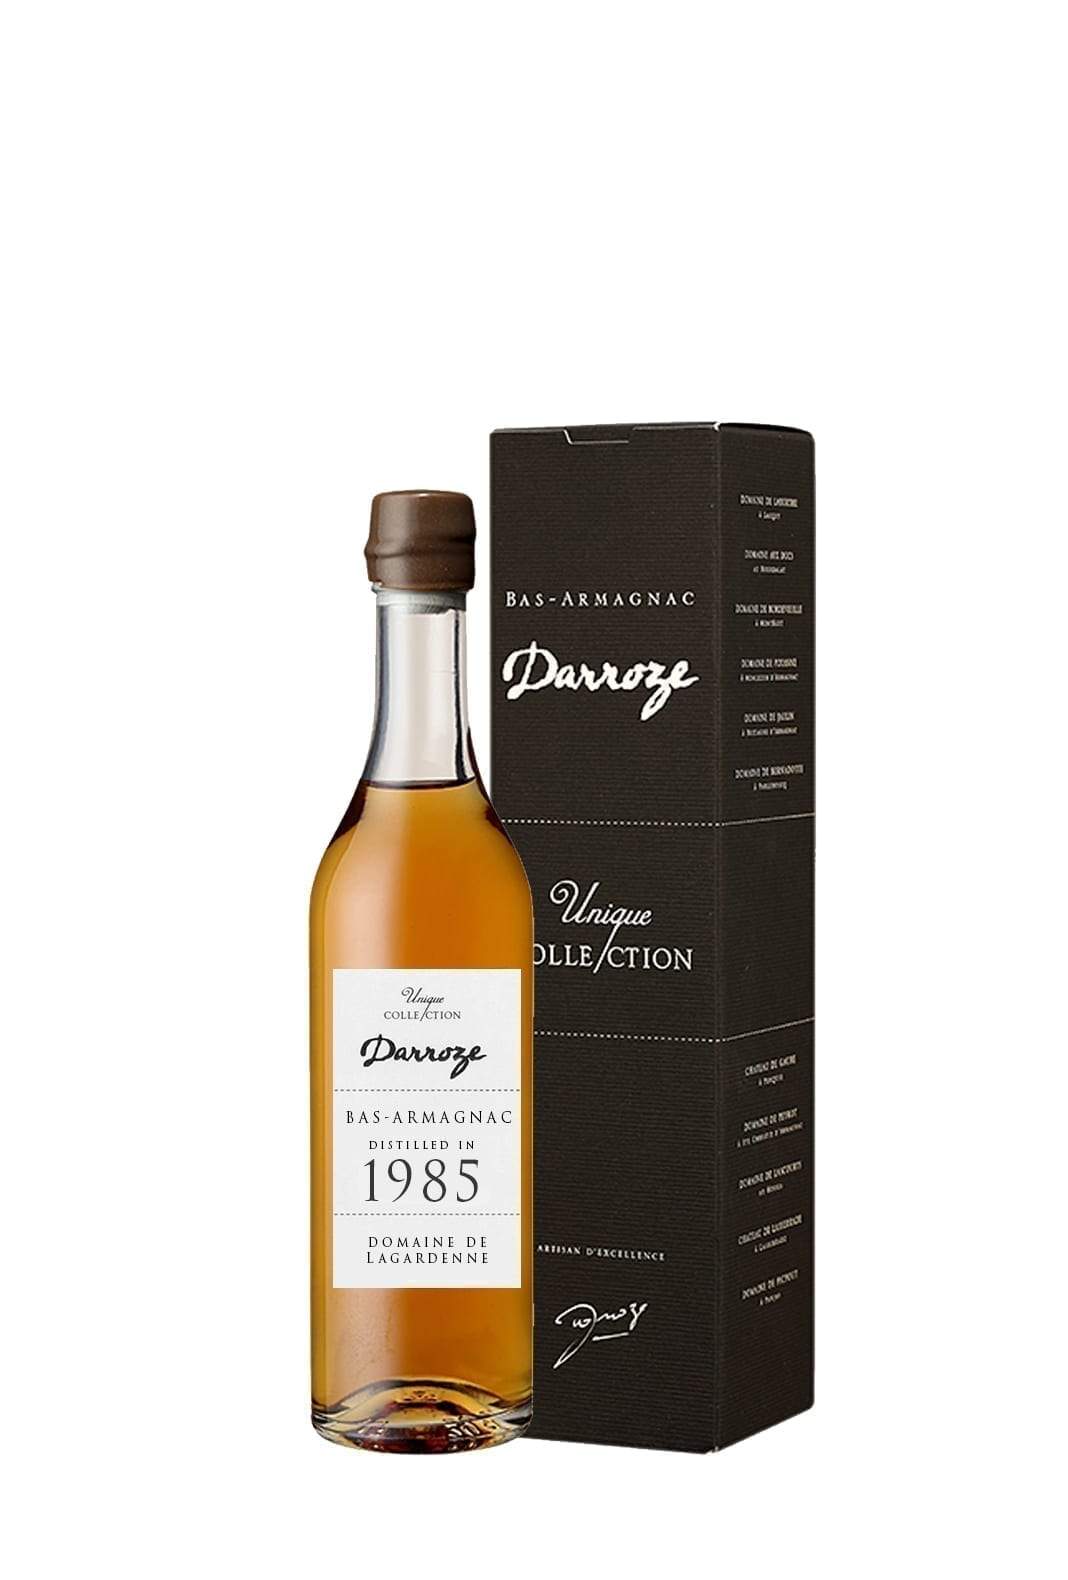 Darroze 1985 Lagardenne Grand Bas Armagnac 48.9% 200ml | Brandy | Shop online at Spirits of France